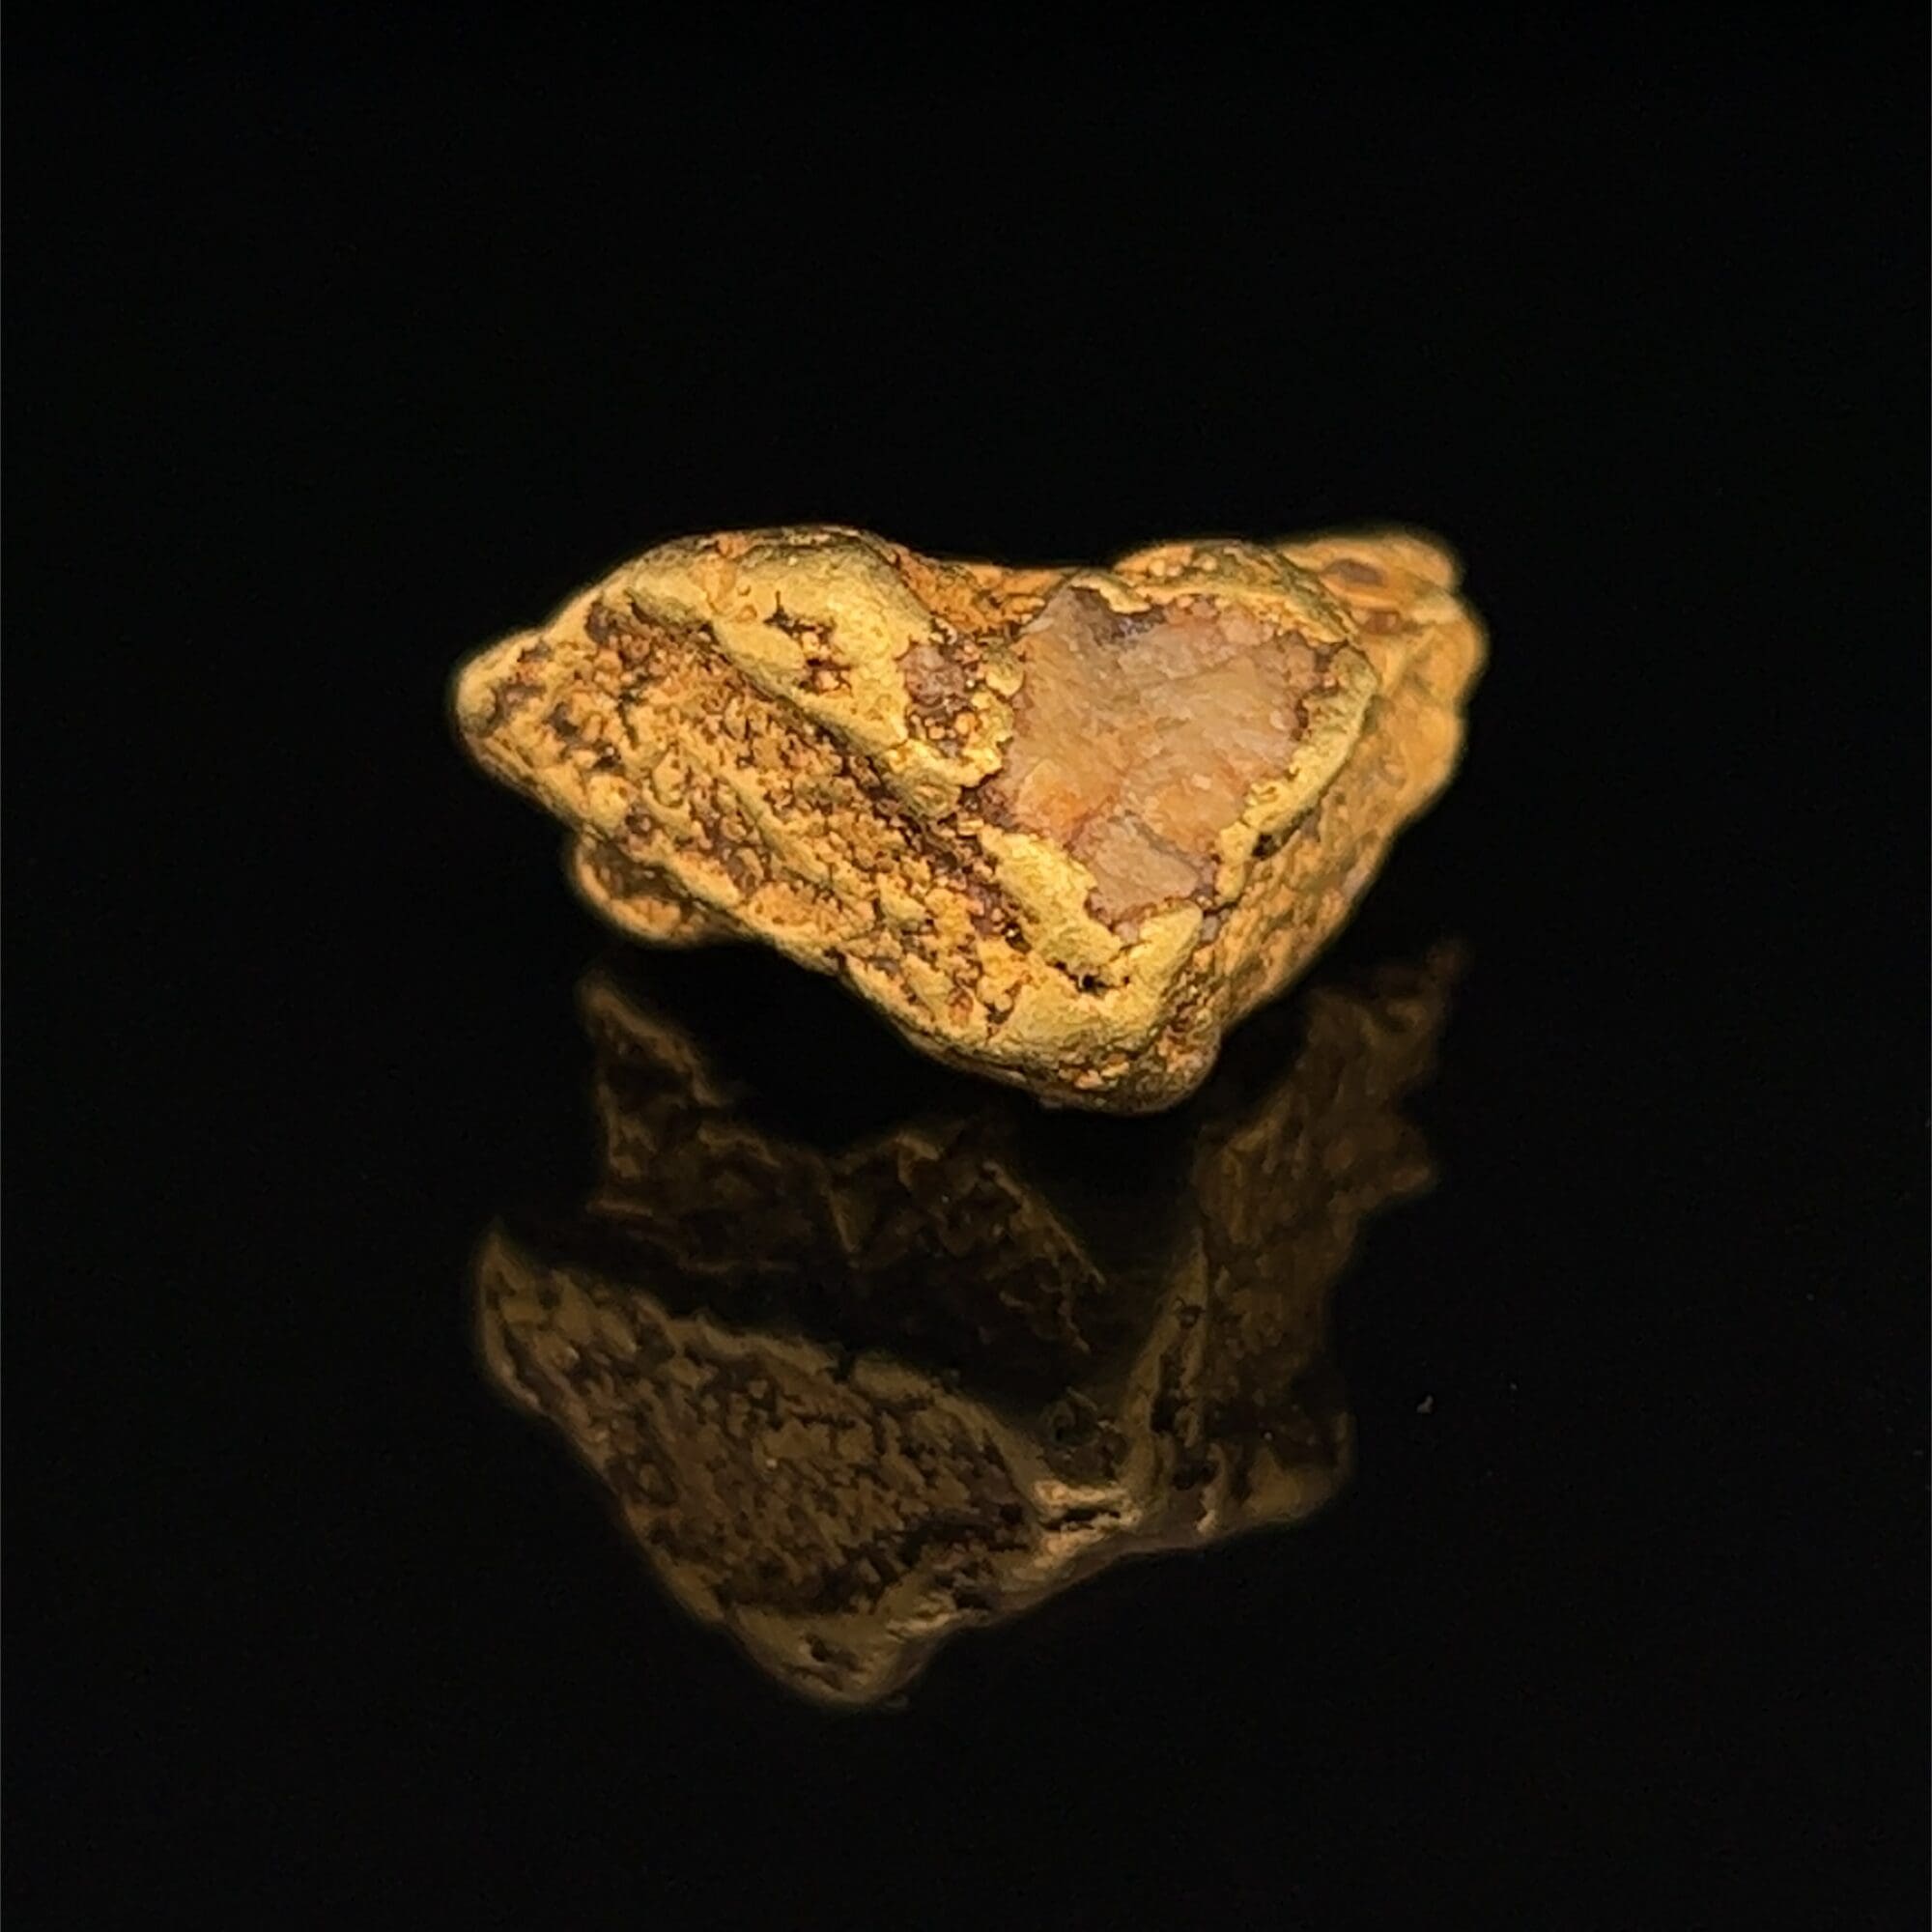 Natural Alaskan Gold Dust Starting at Just $99.99 - Alaska Mint